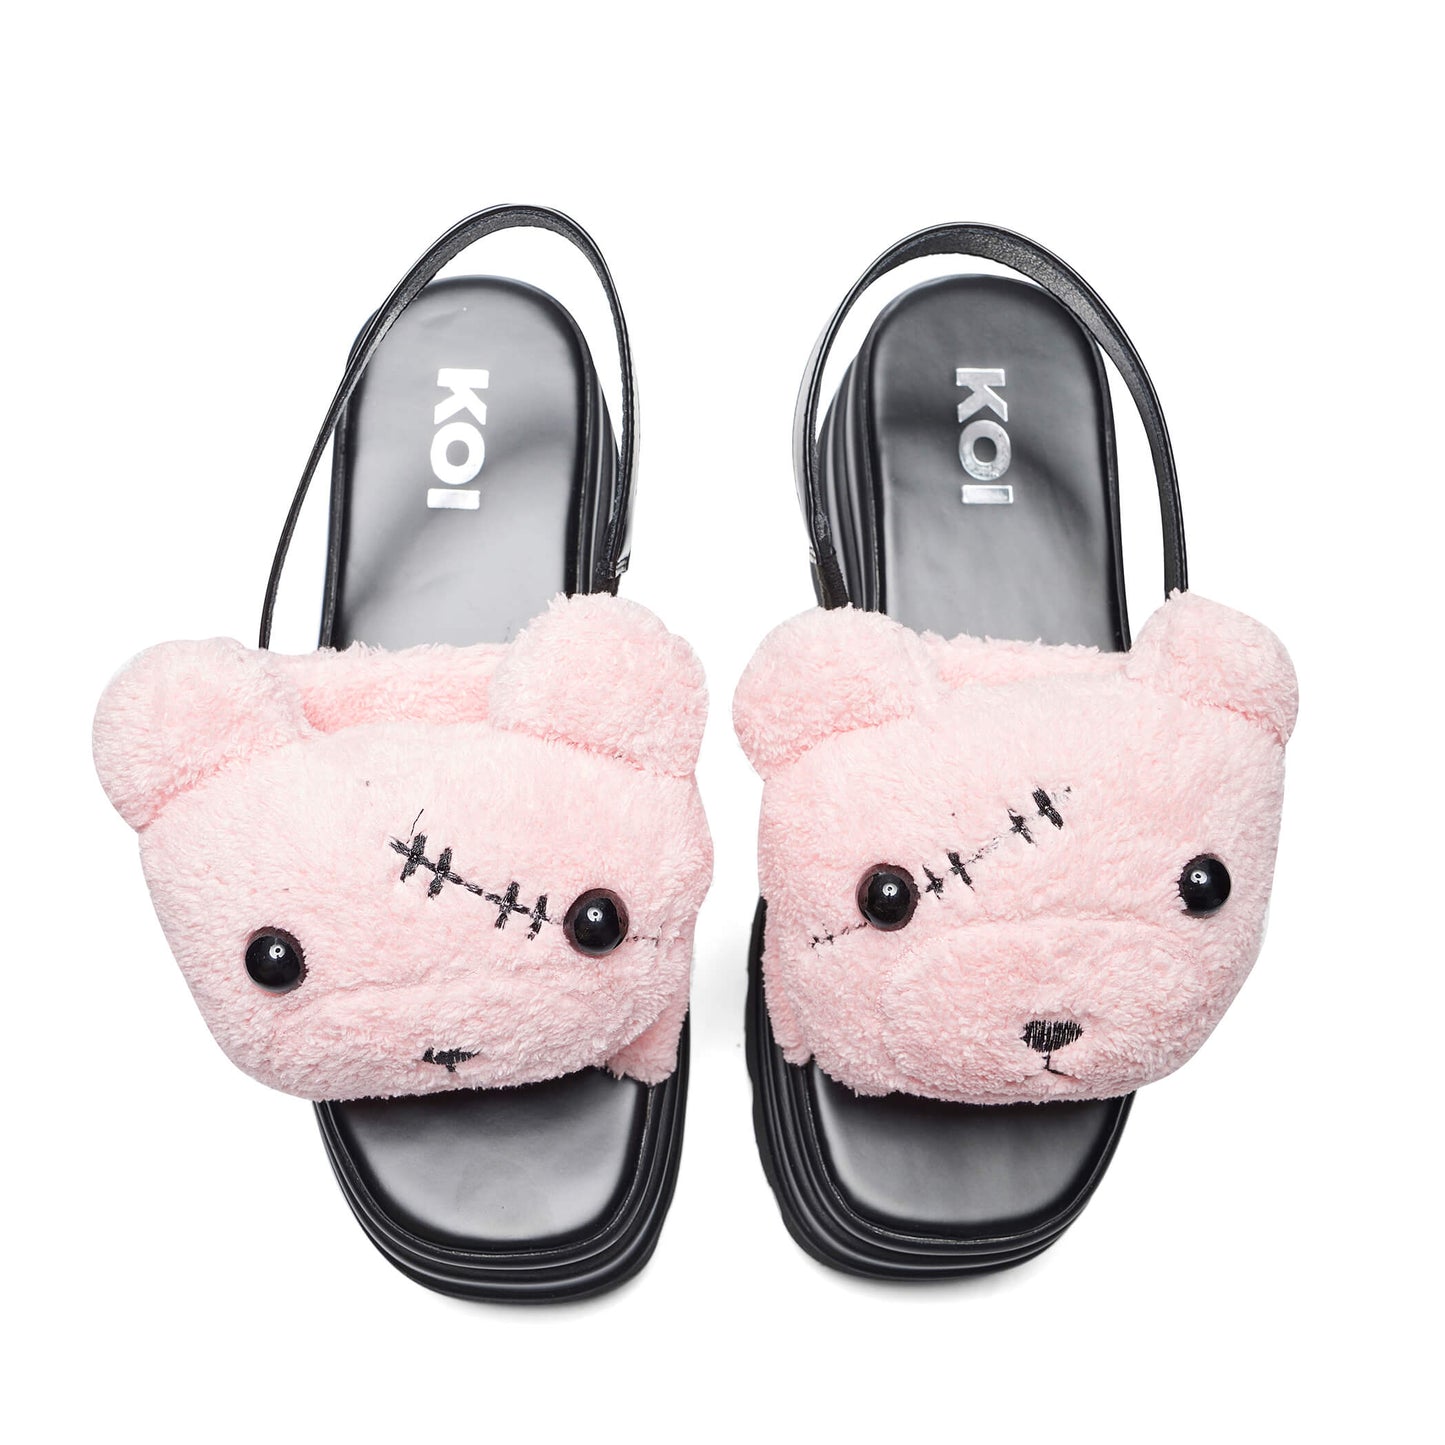 Binky Fuzzy Chunky Sandals - Pink - KOI Footwear - Top View